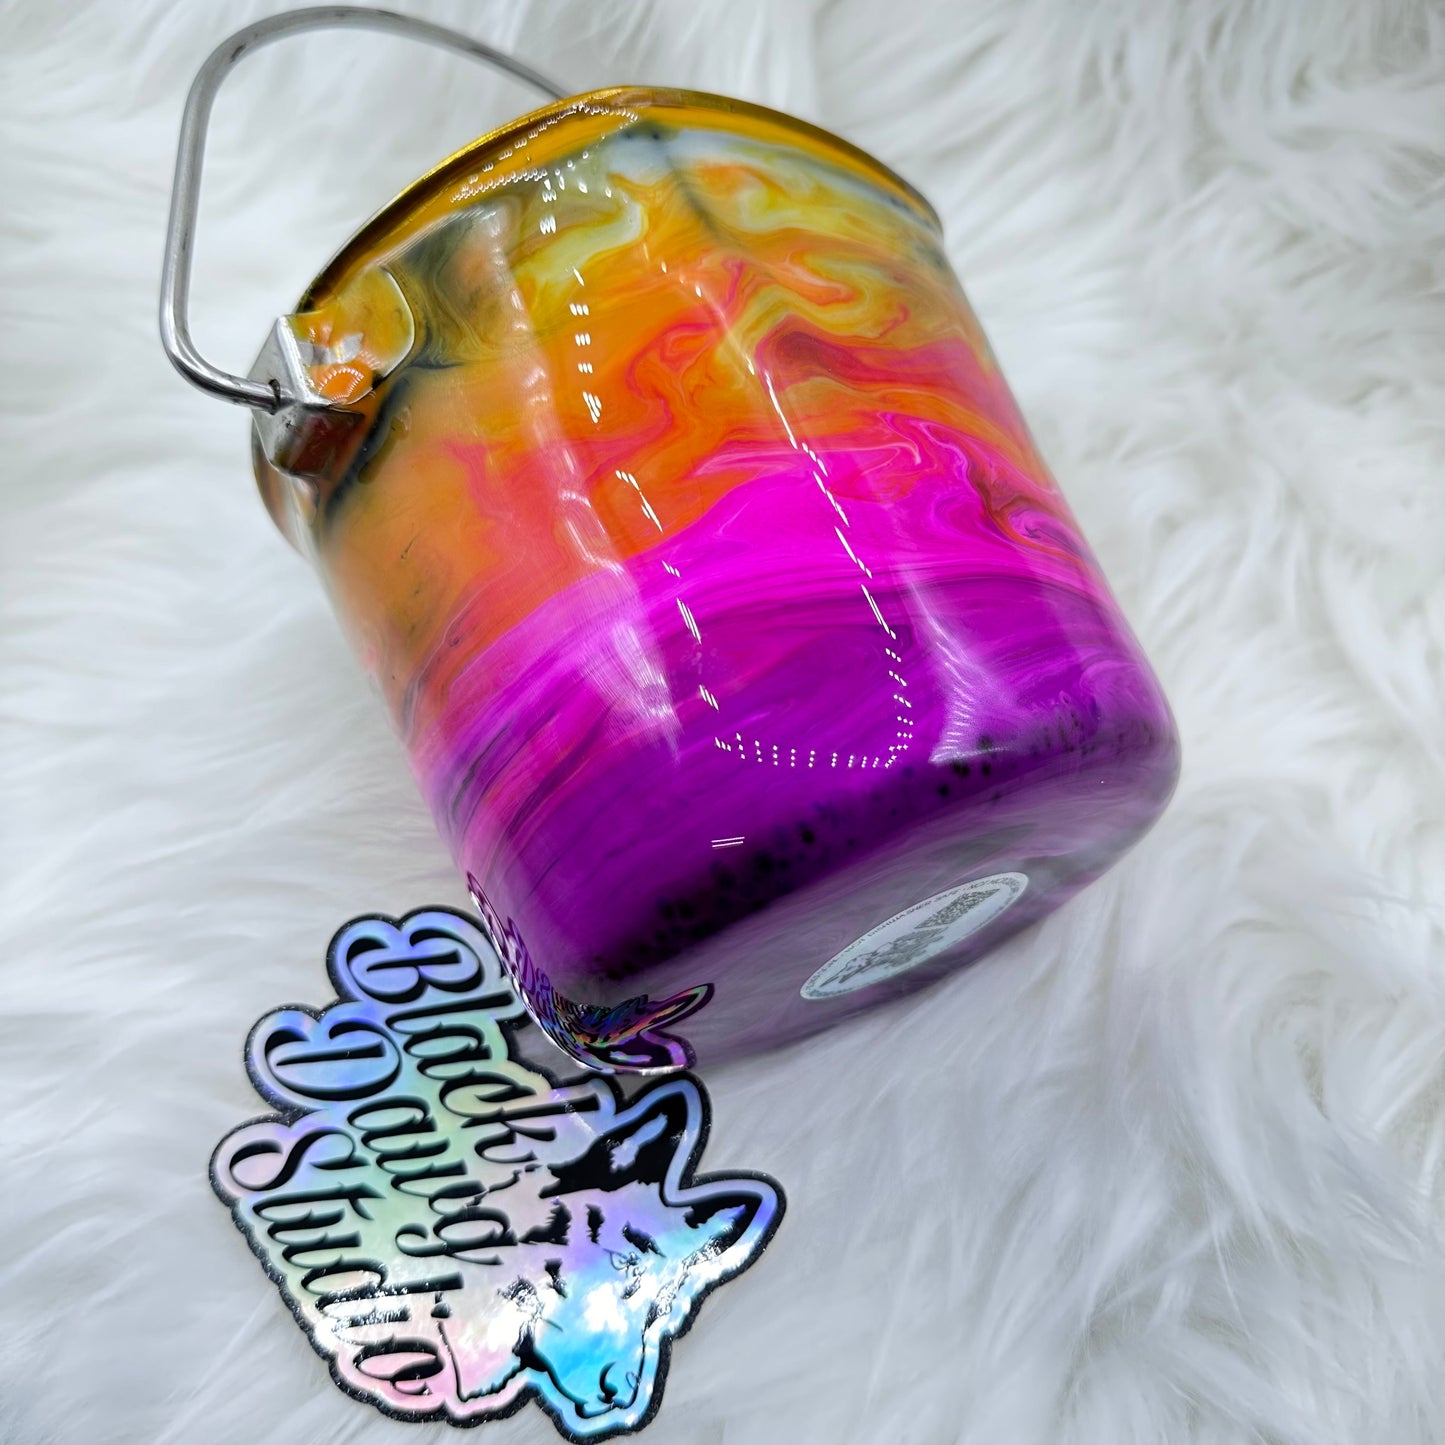 1qt Water Bucket Pail Dog Tumbler - Ombré Ink Swirls Orange/Pink/Purple - Epoxy Tumbler for Dogs